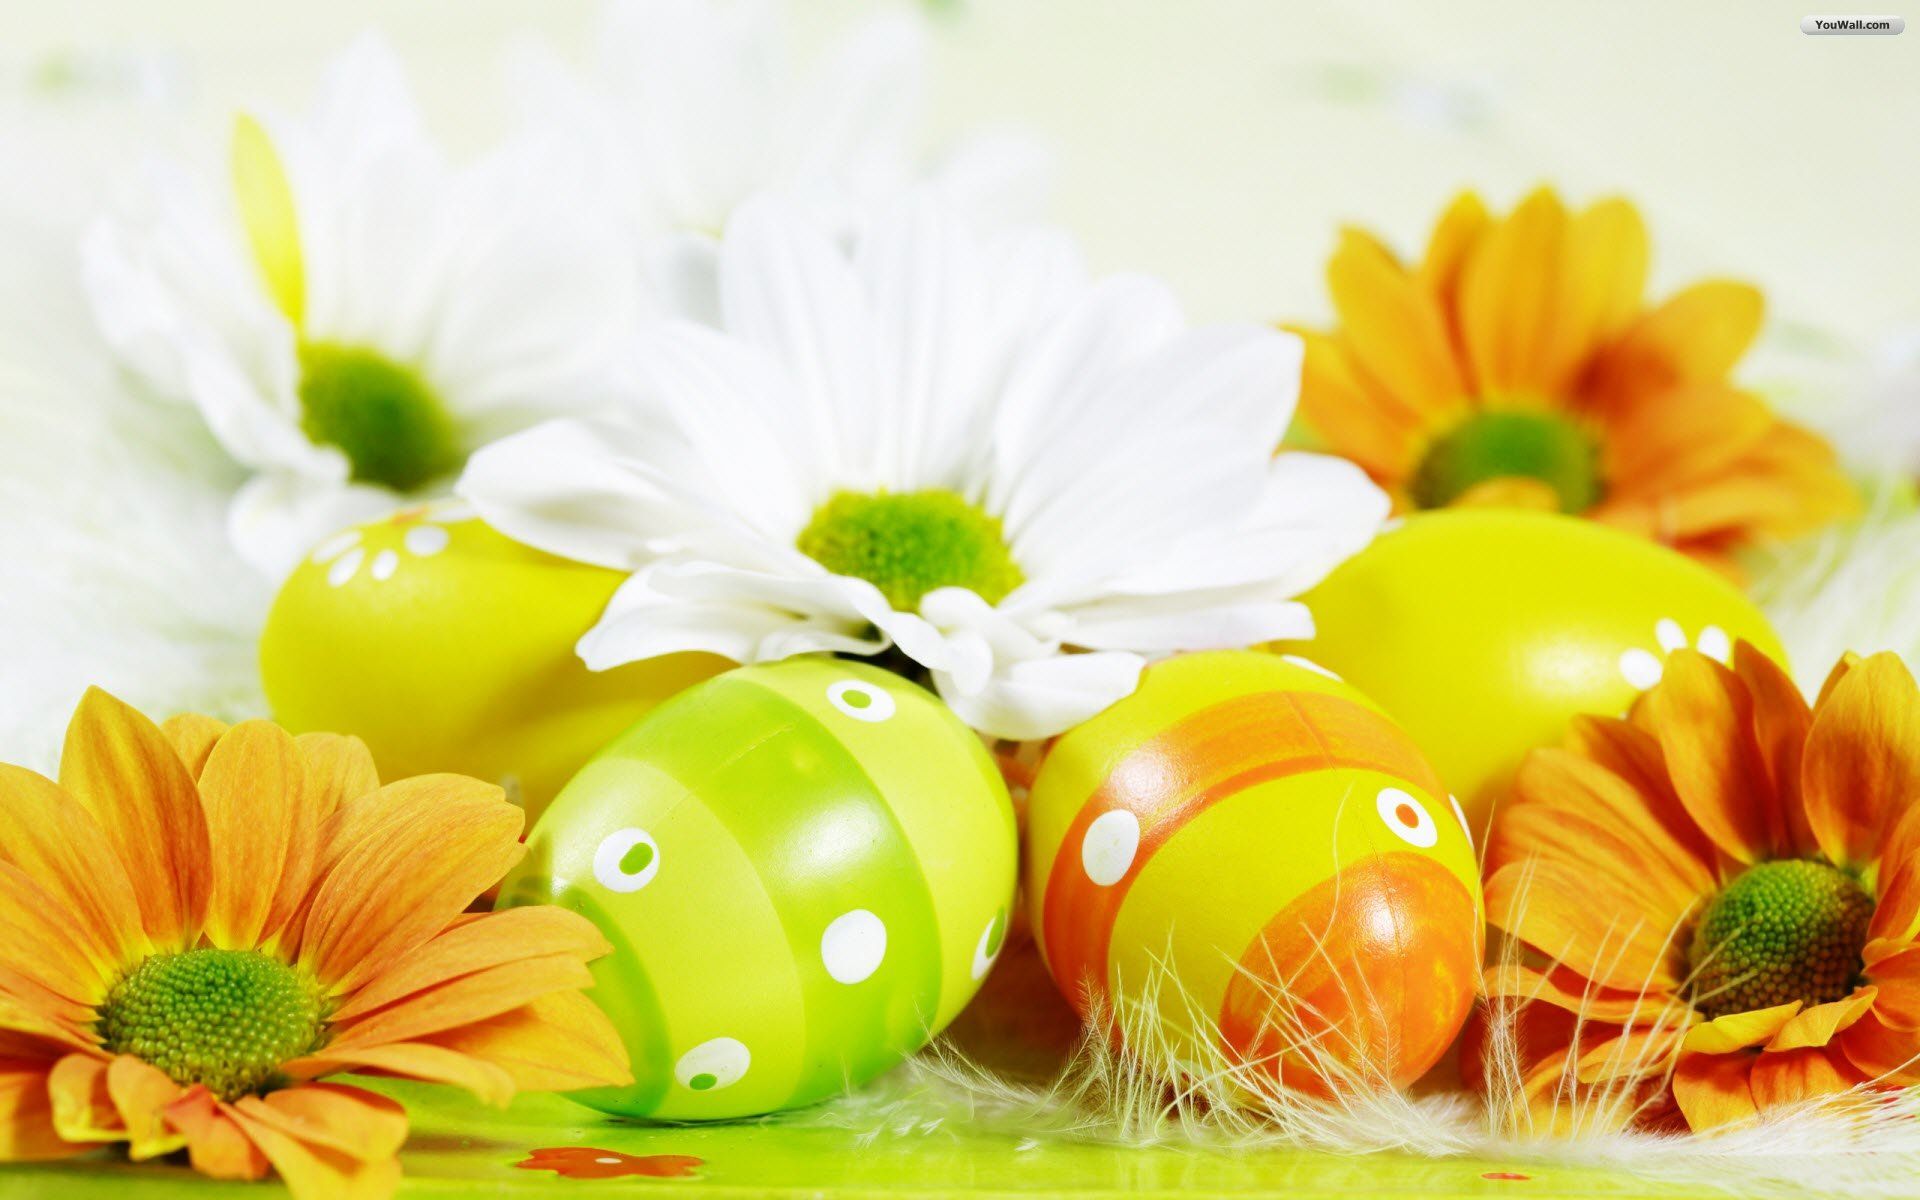 YouWall - Easter Eggs Wallpaper - wallpaper,wallpapers,free ...